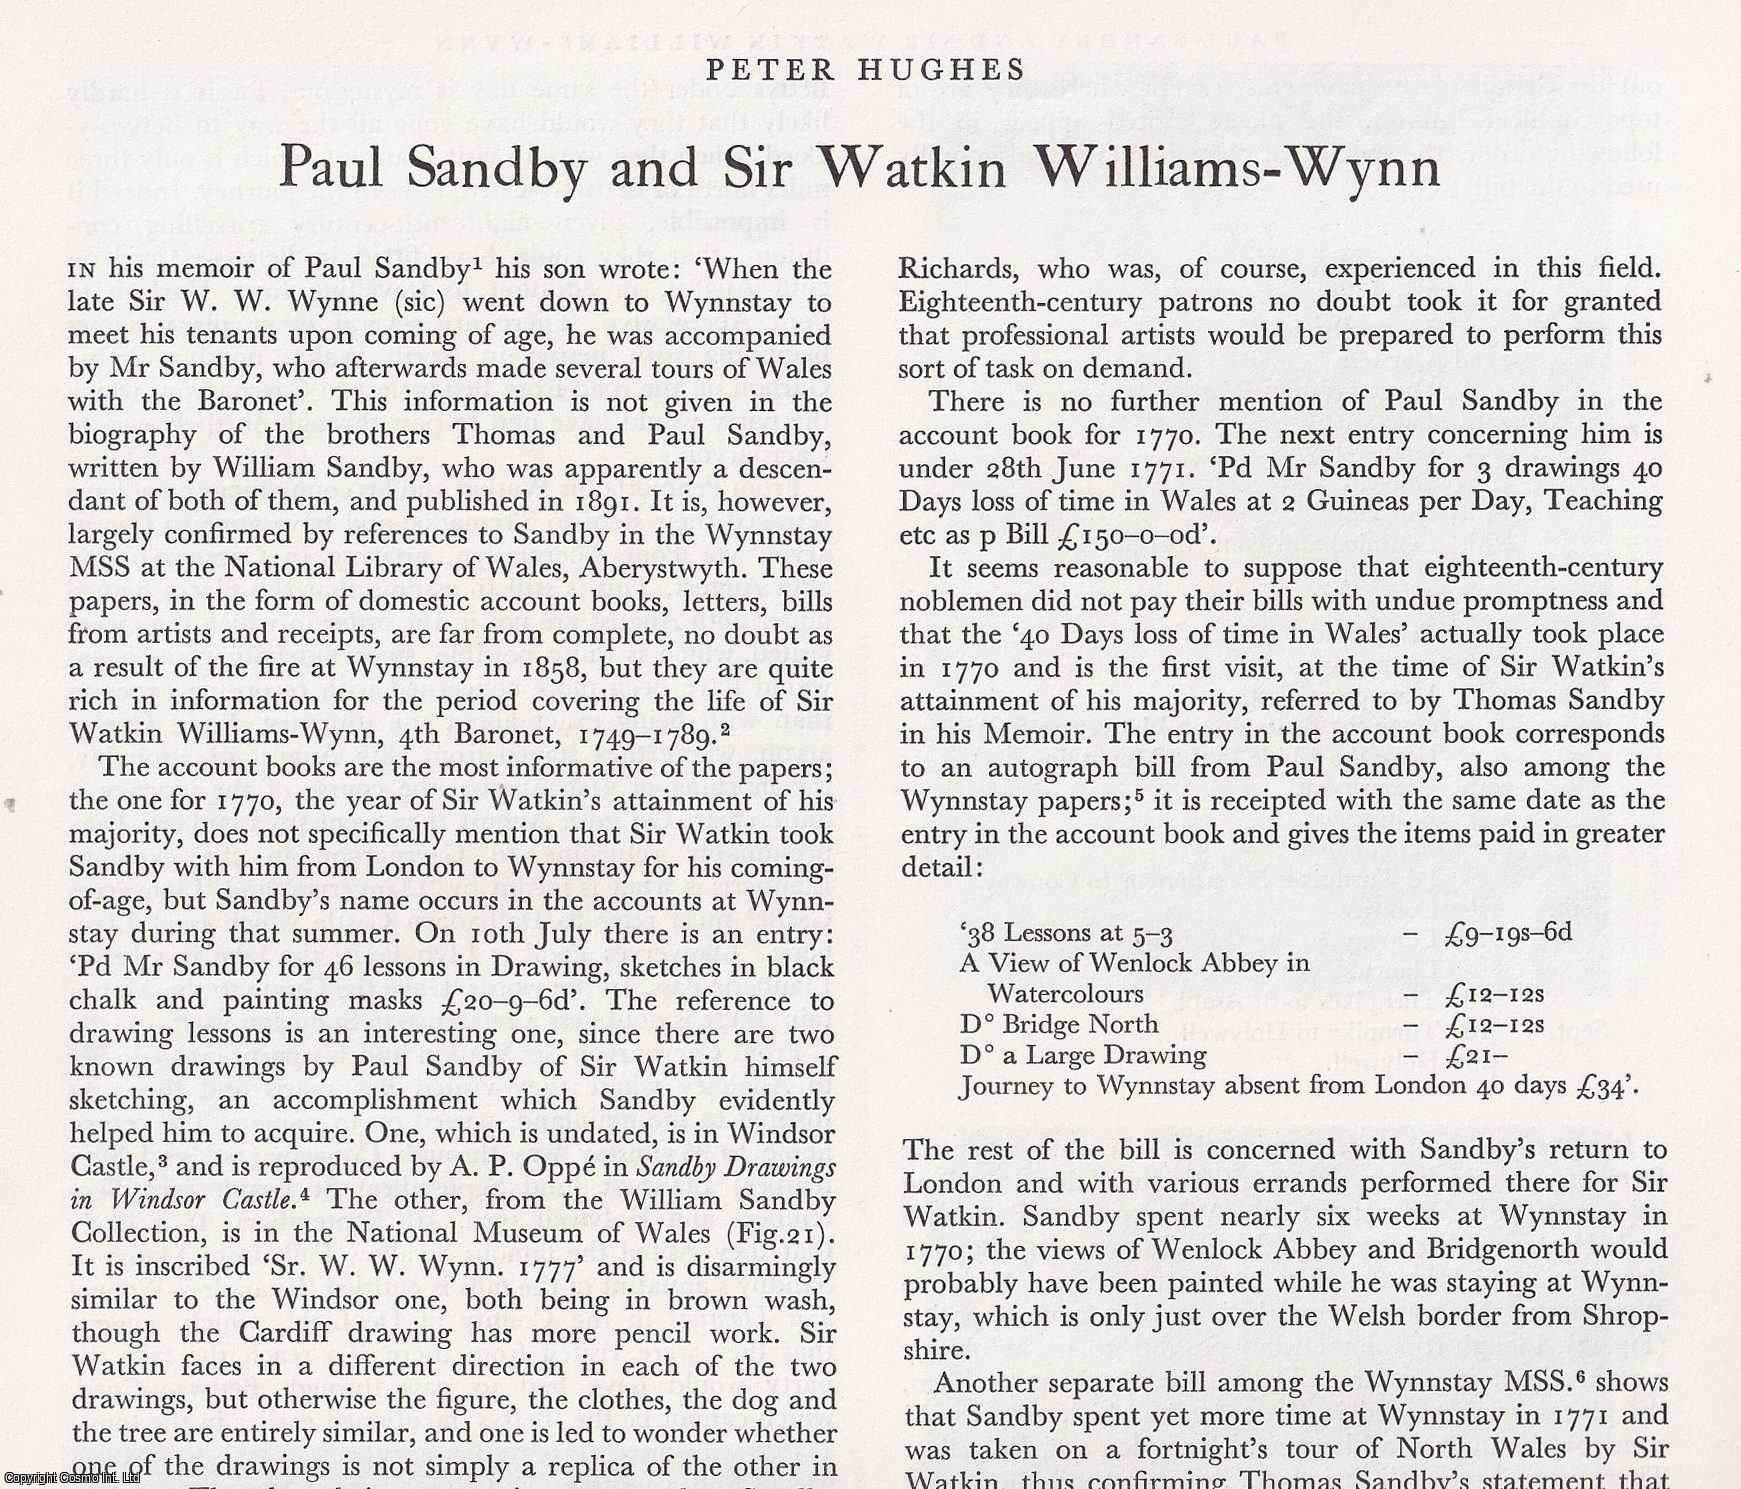 Peter Hughes - Paul Sandby and Sir Watkin Williams-Wynn. An original article from The Burlington Magazine, 1972.